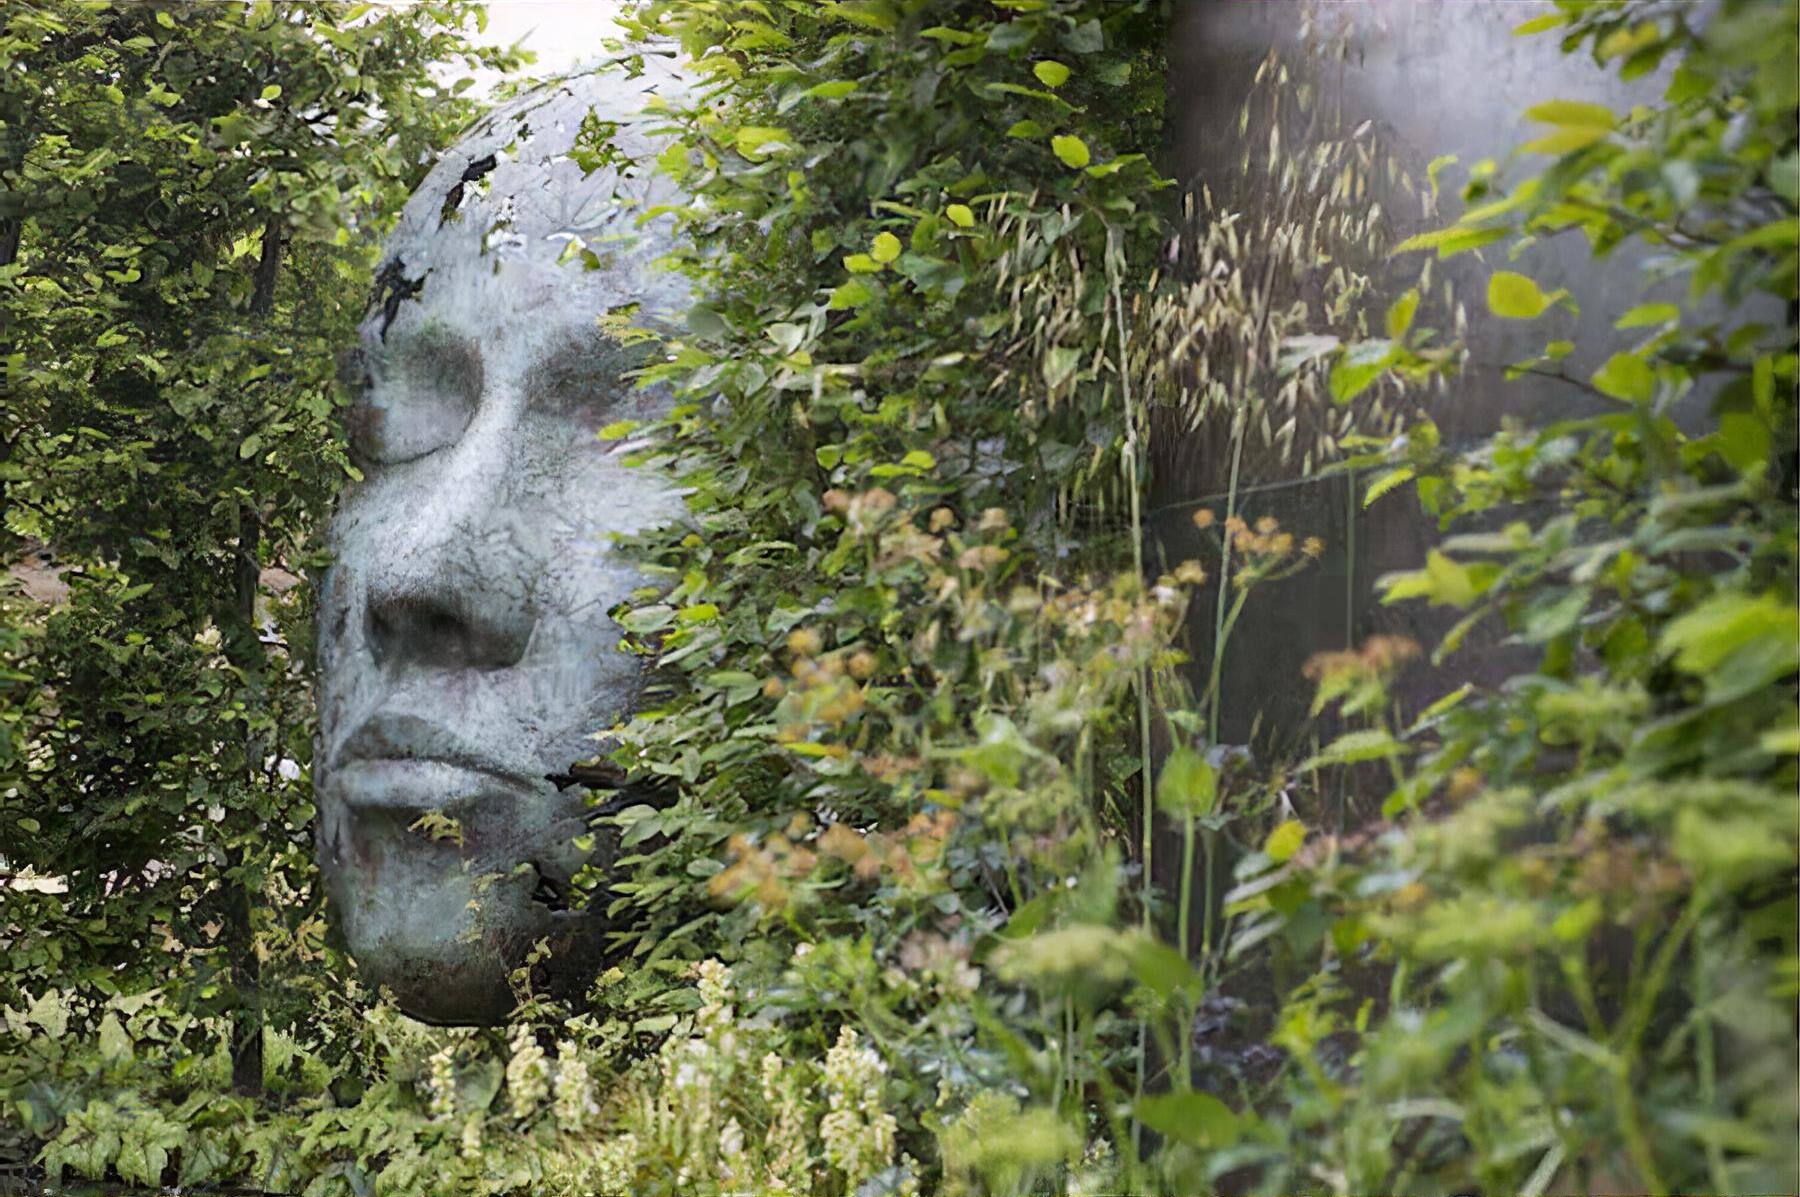 The ‘Thrive Reflective Mind’ Garden by Buckinghamshire garden designer Richard Rogers